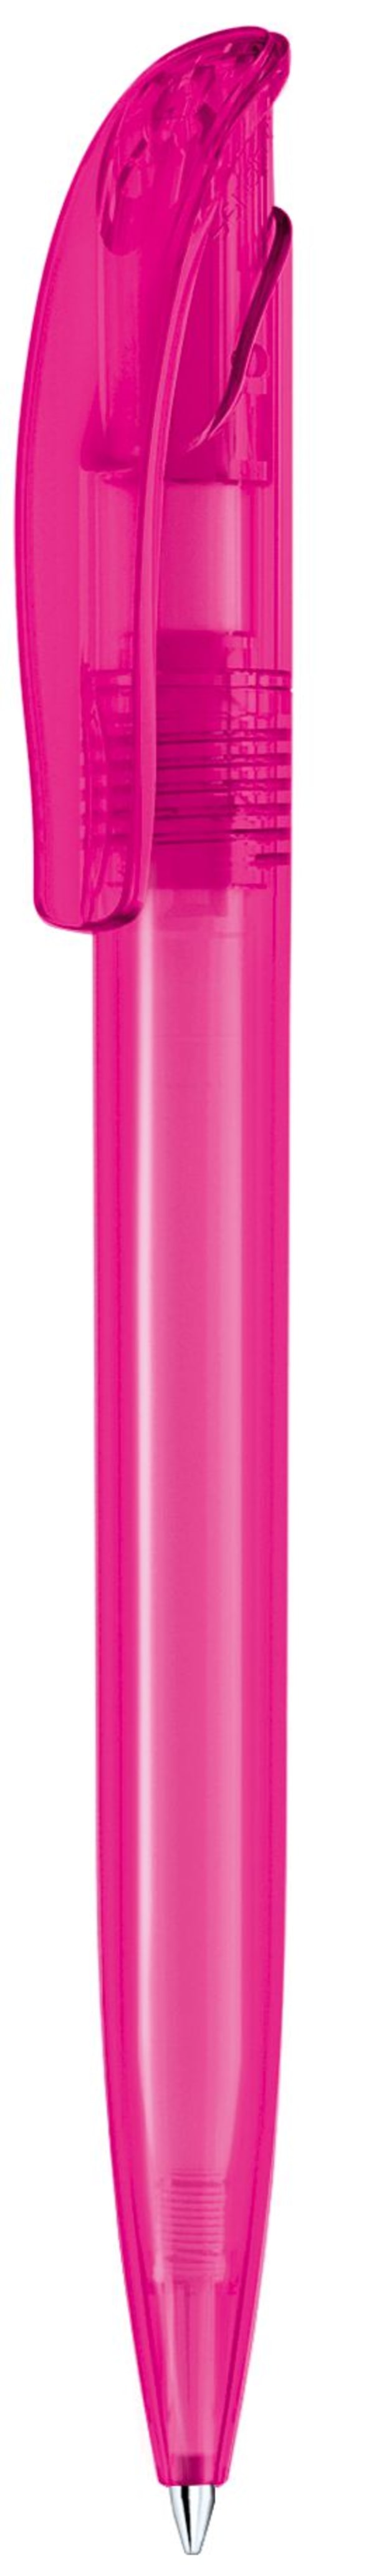 Kugelschreiber-Challenger-Frosted-blau-dokumentenecht-Pink-Kunststoff-Frontansicht-1